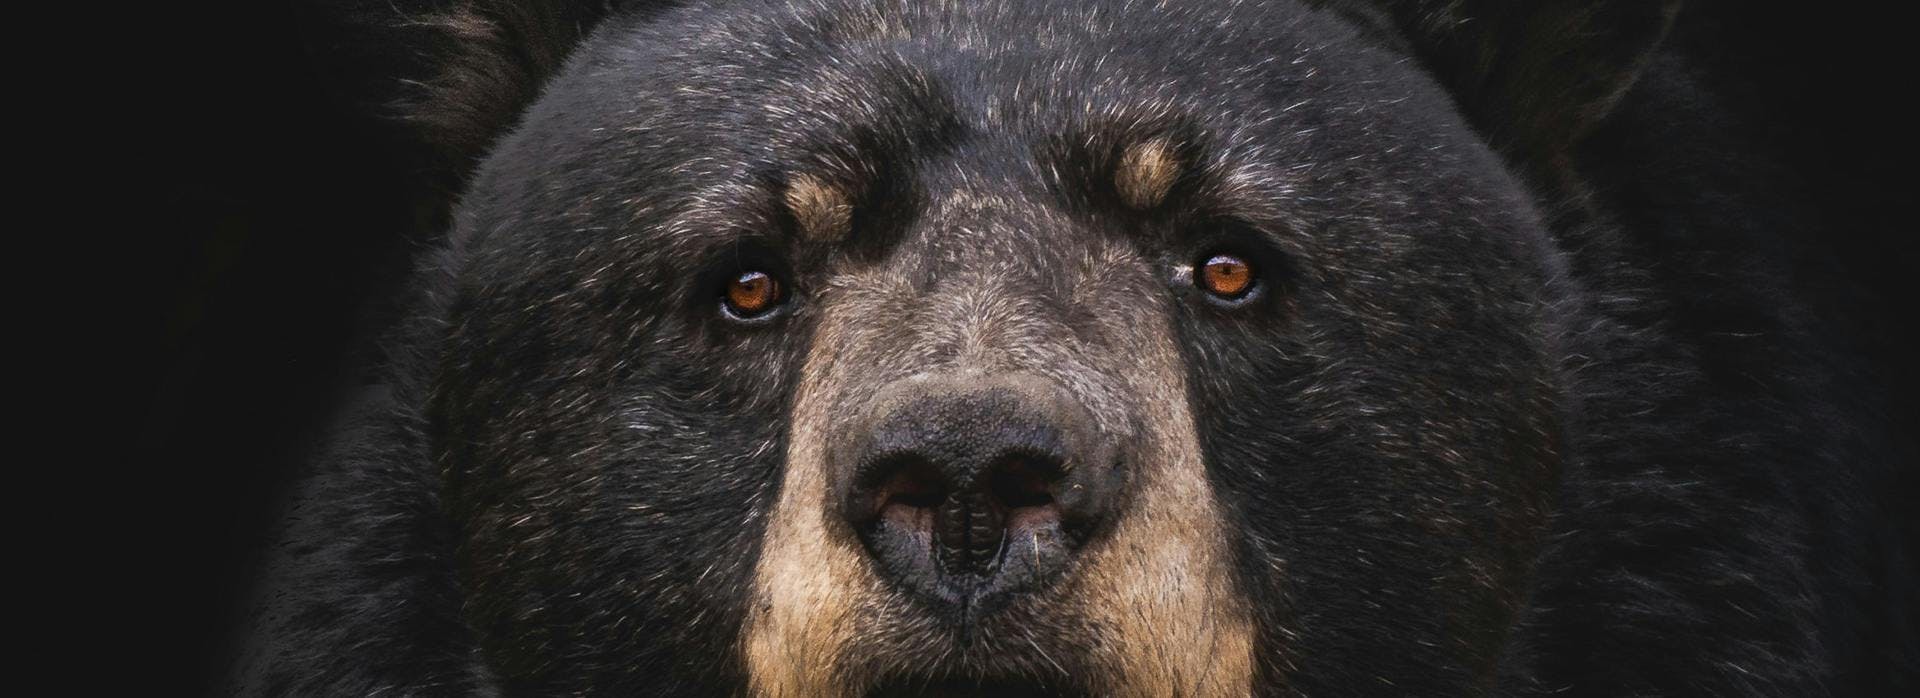 Bear snout